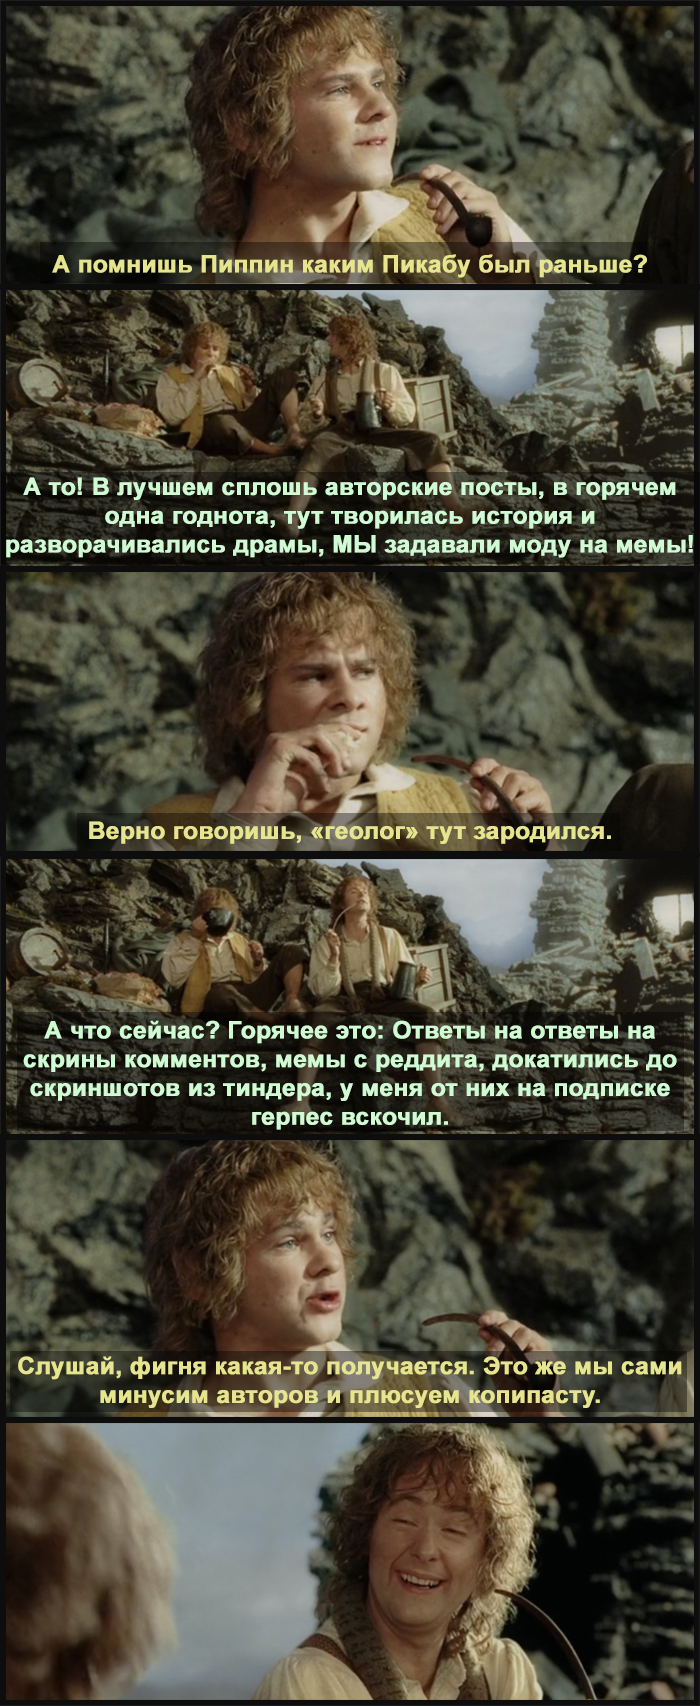 Do you remember? - My, Lord of the Rings, Storyboard, Humor, Peekaboo, Longpost